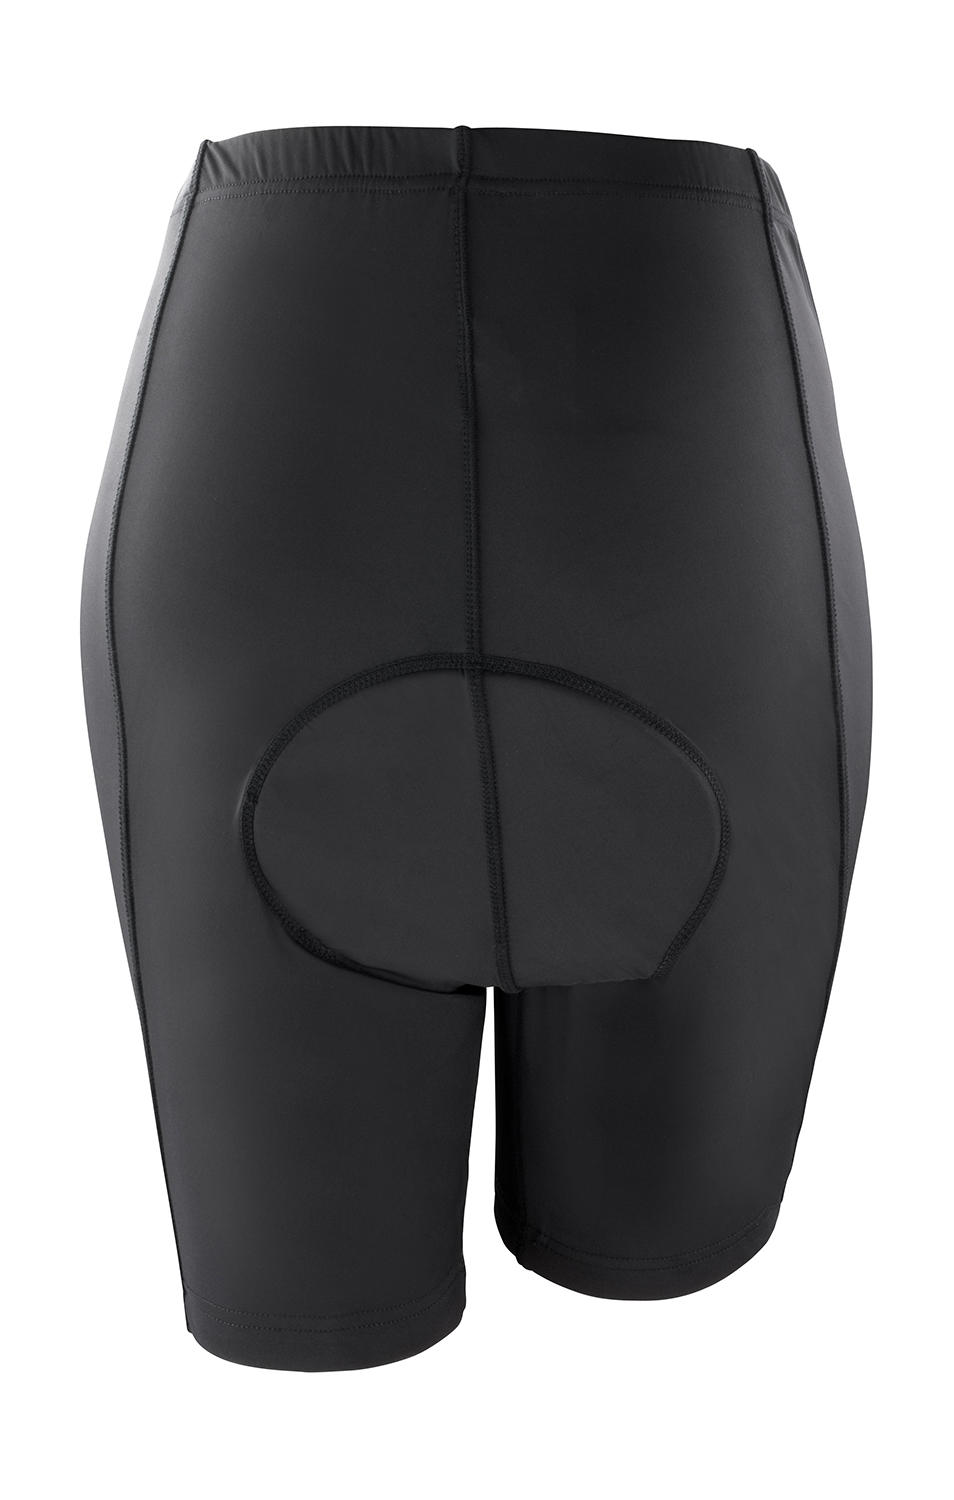  Ladies Padded Bike Shorts in Farbe Black